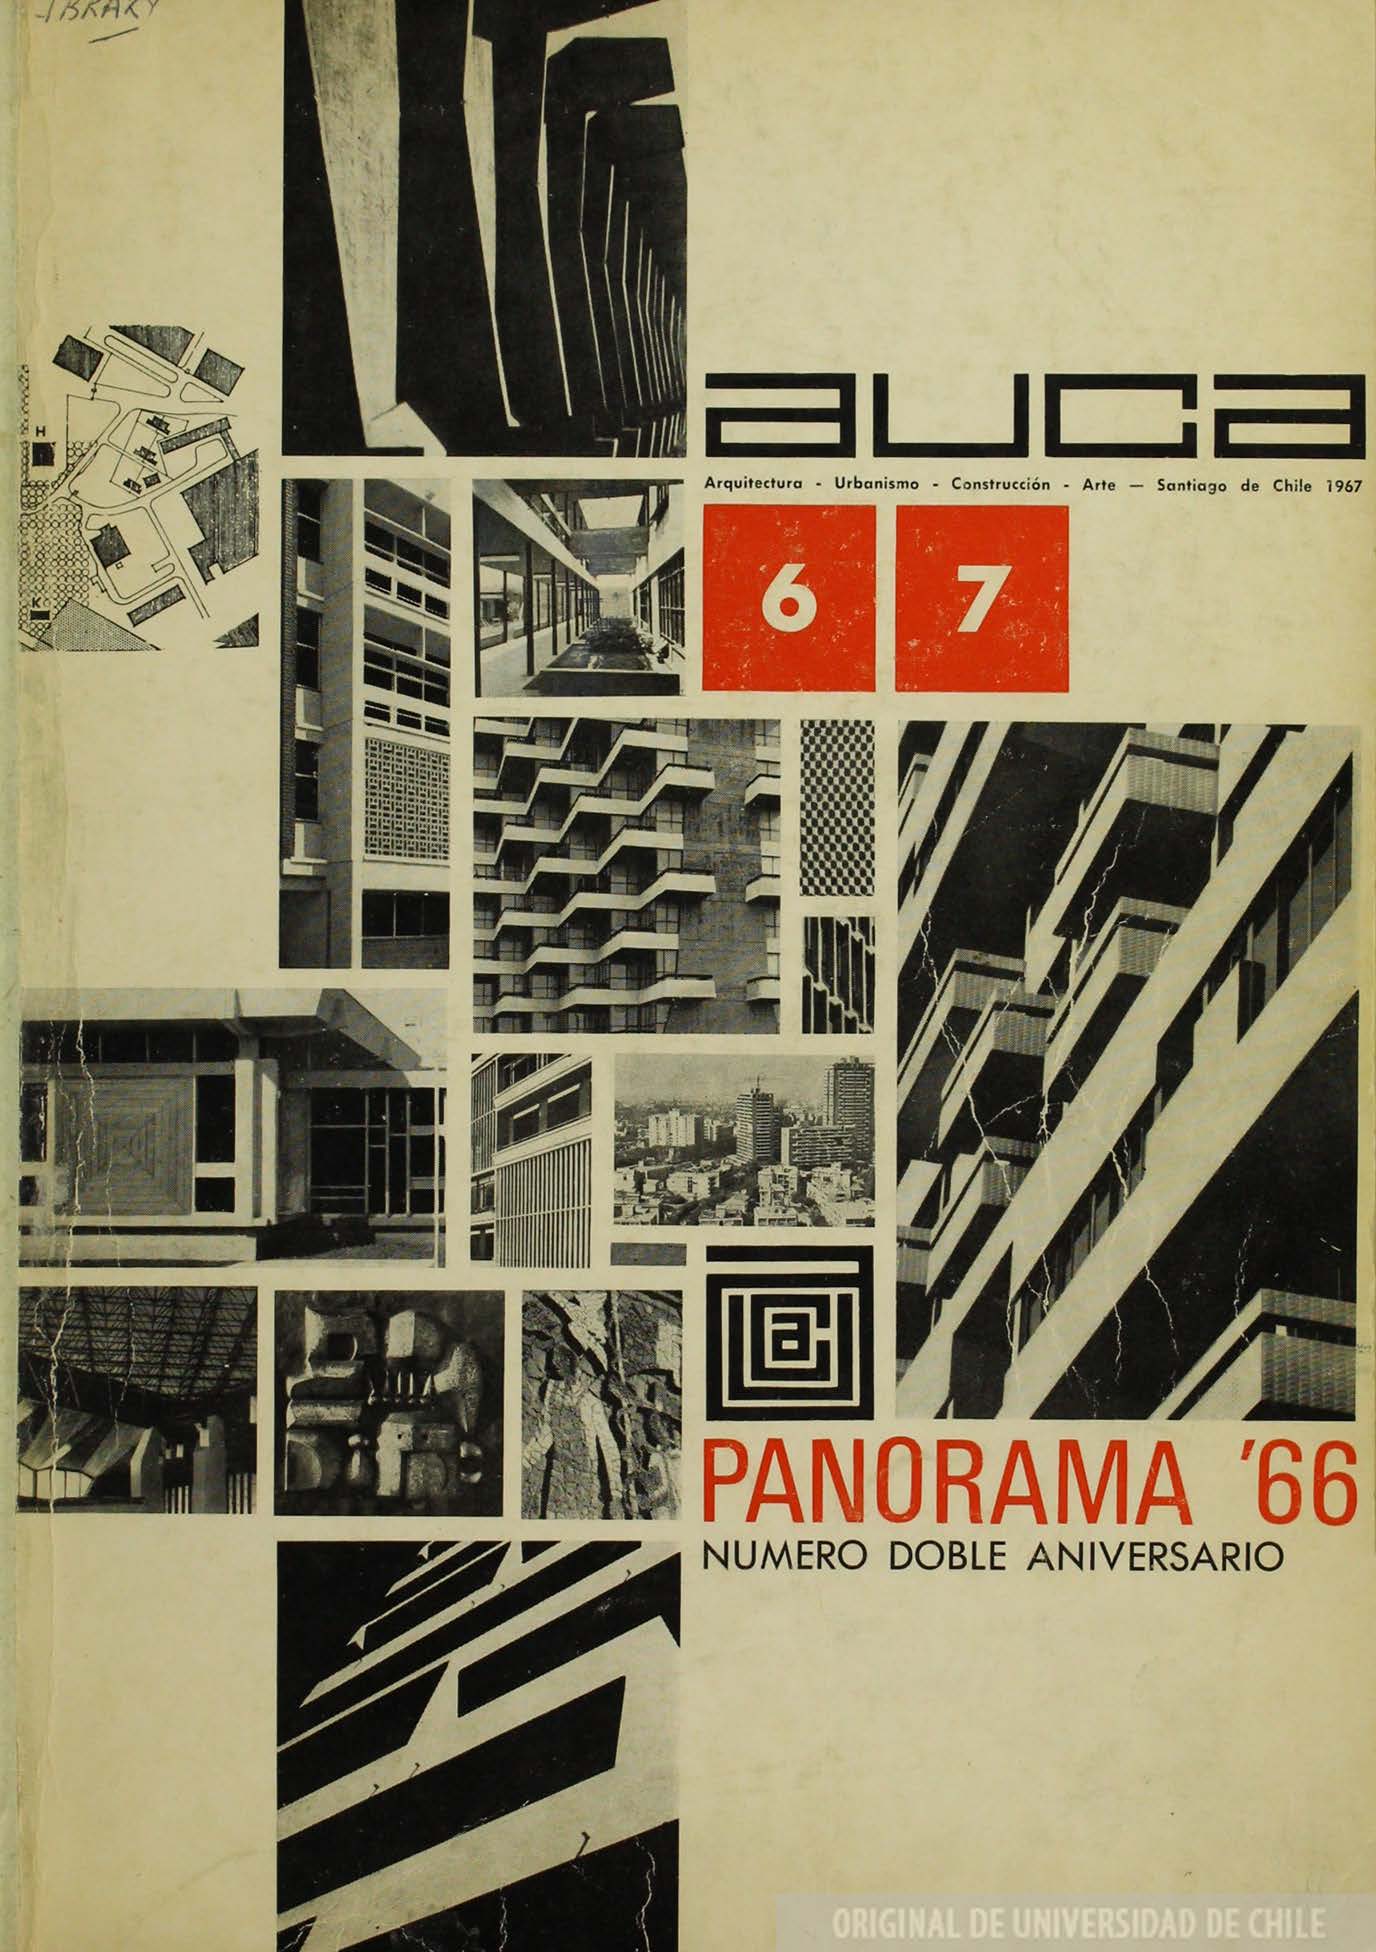 											Ver Núm. 6-7 (1967): Panorama '66 Número Doble Aniversario
										